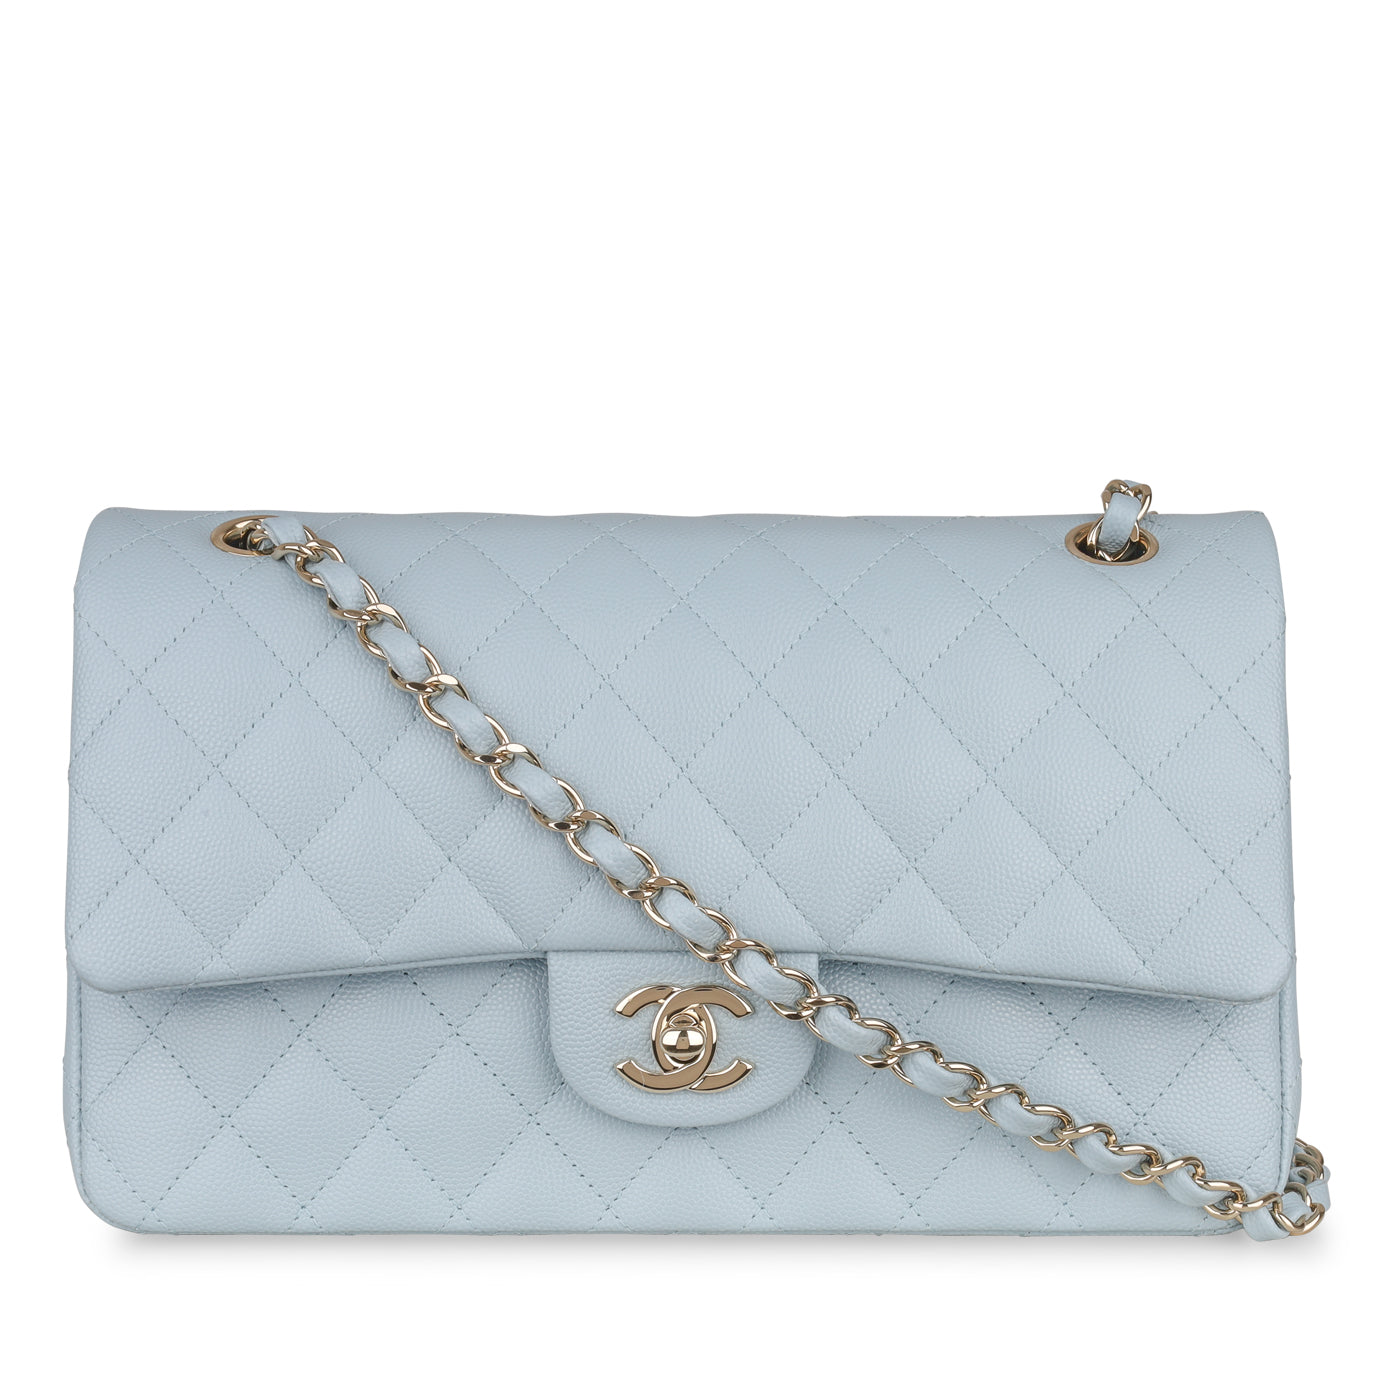 Chanel - Medium Classic Flap Bag - Baby Blue Caviar - Pre-Loved